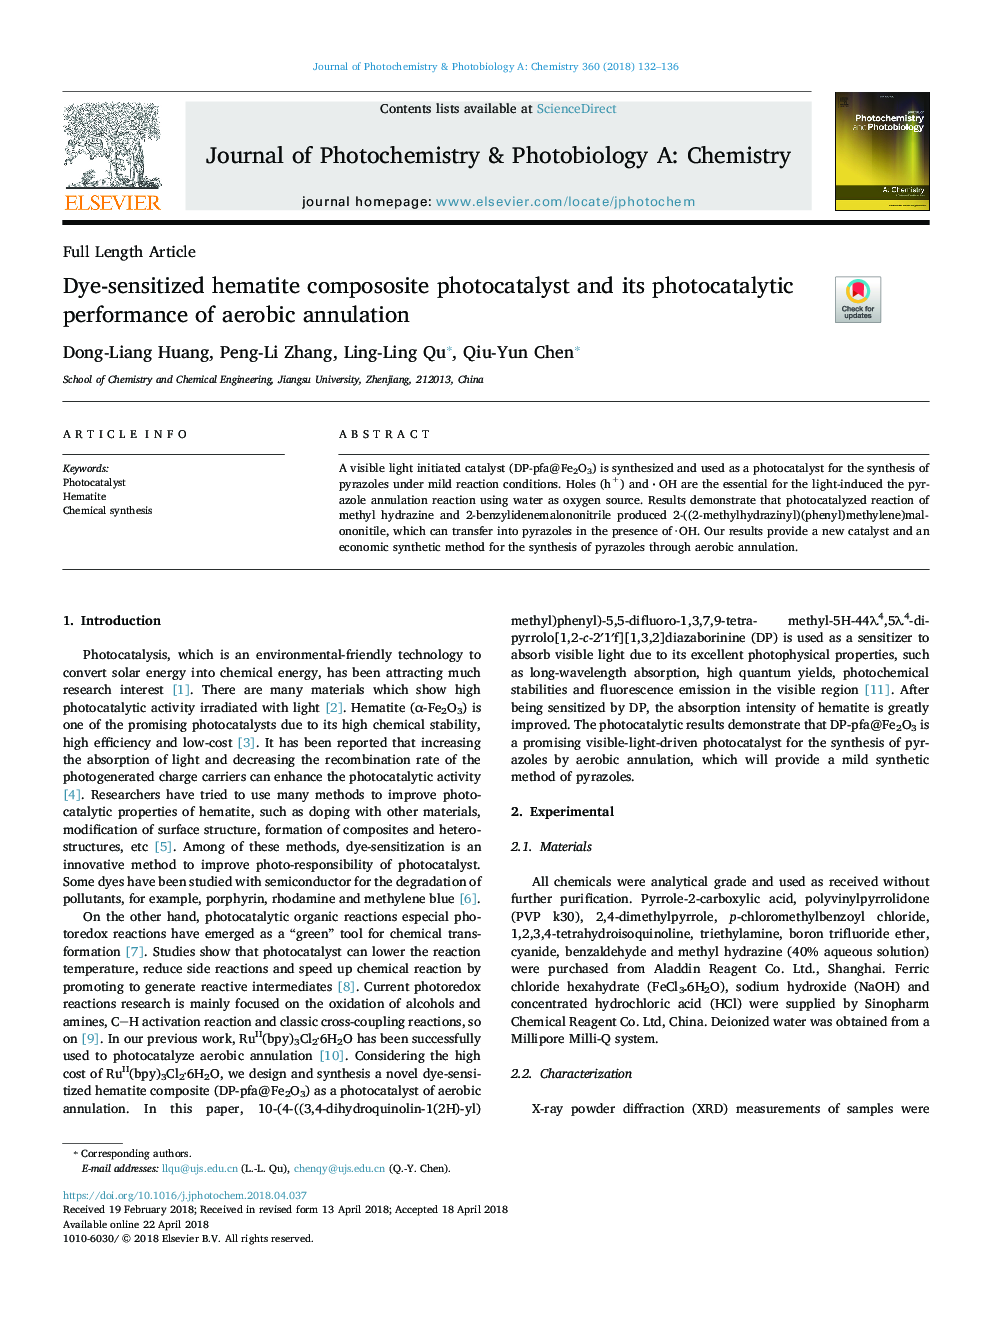 Dye-sensitized hematite compososite photocatalyst and its photocatalytic performance of aerobic annulation